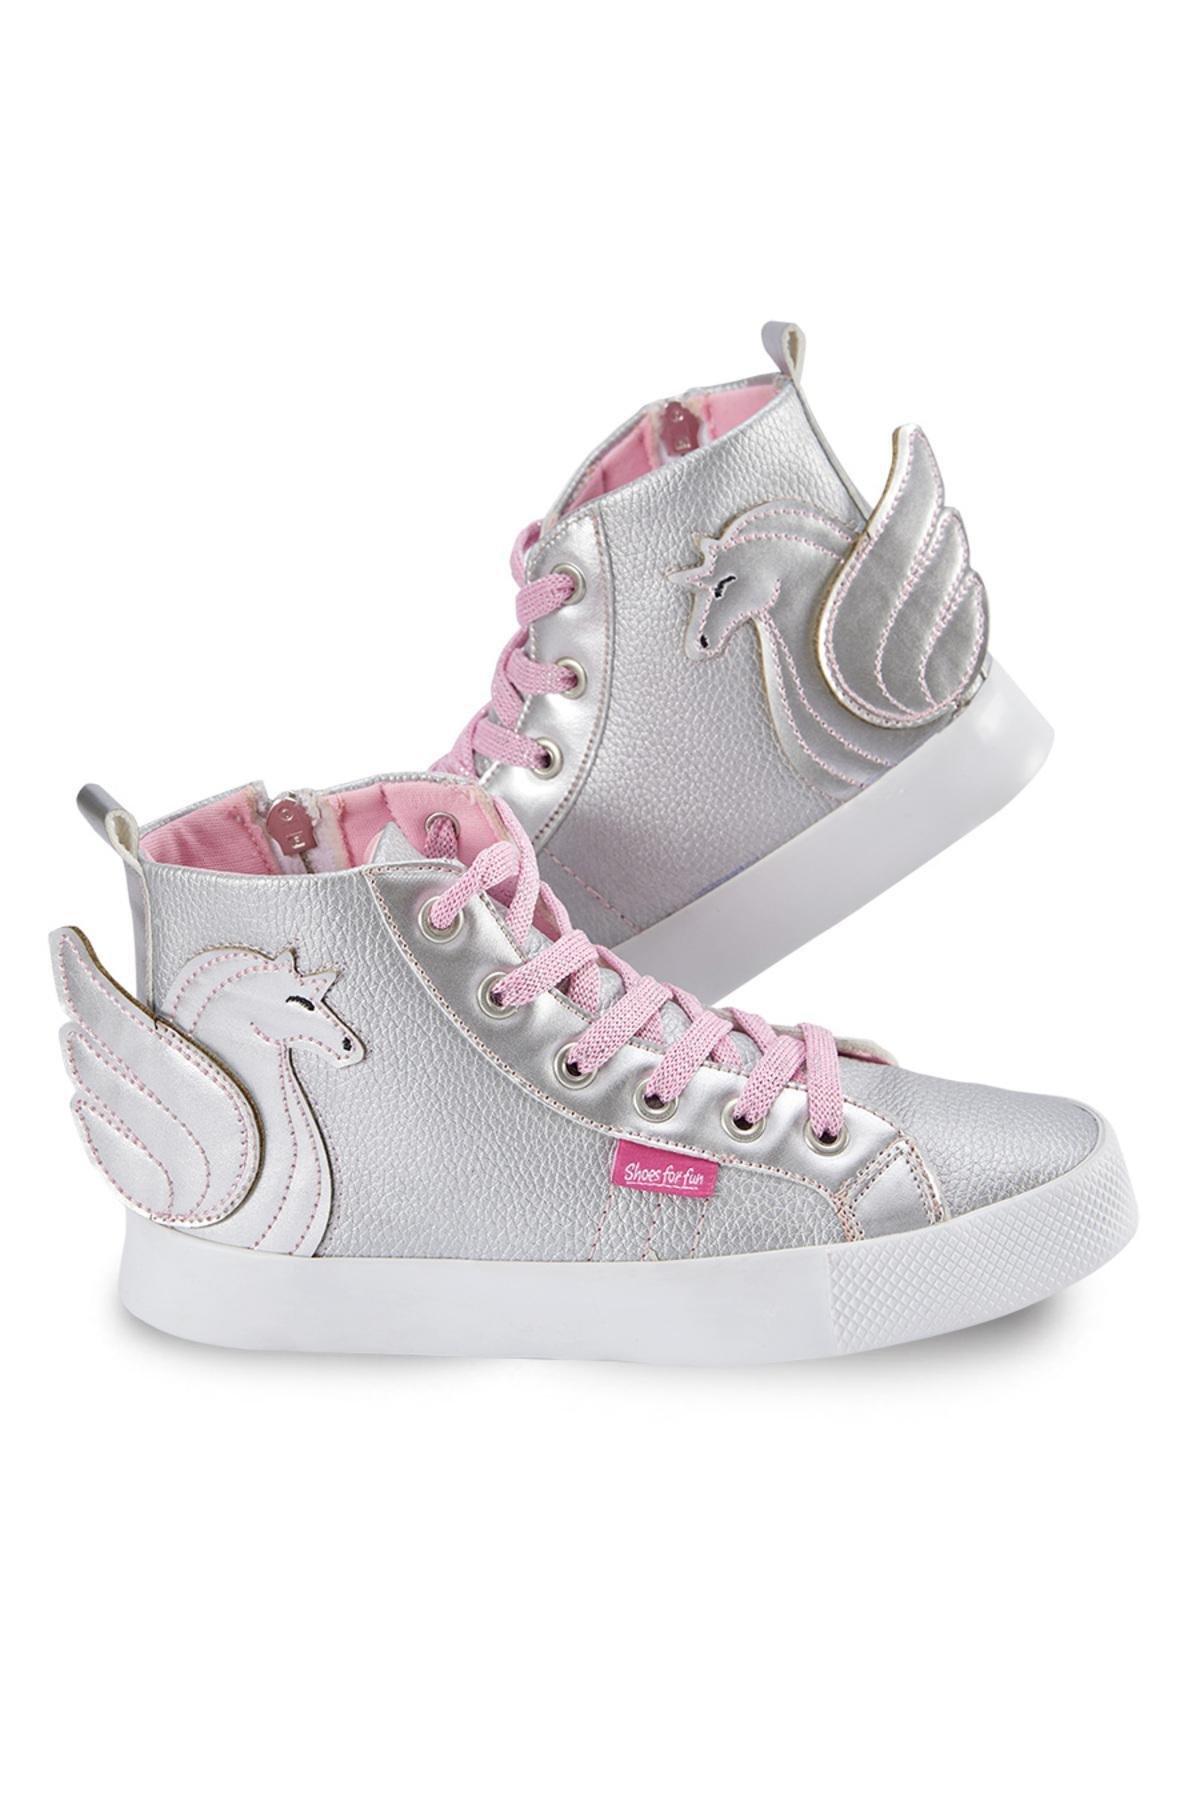 Denokids - Grey Winged Sneakers, Kids Girls